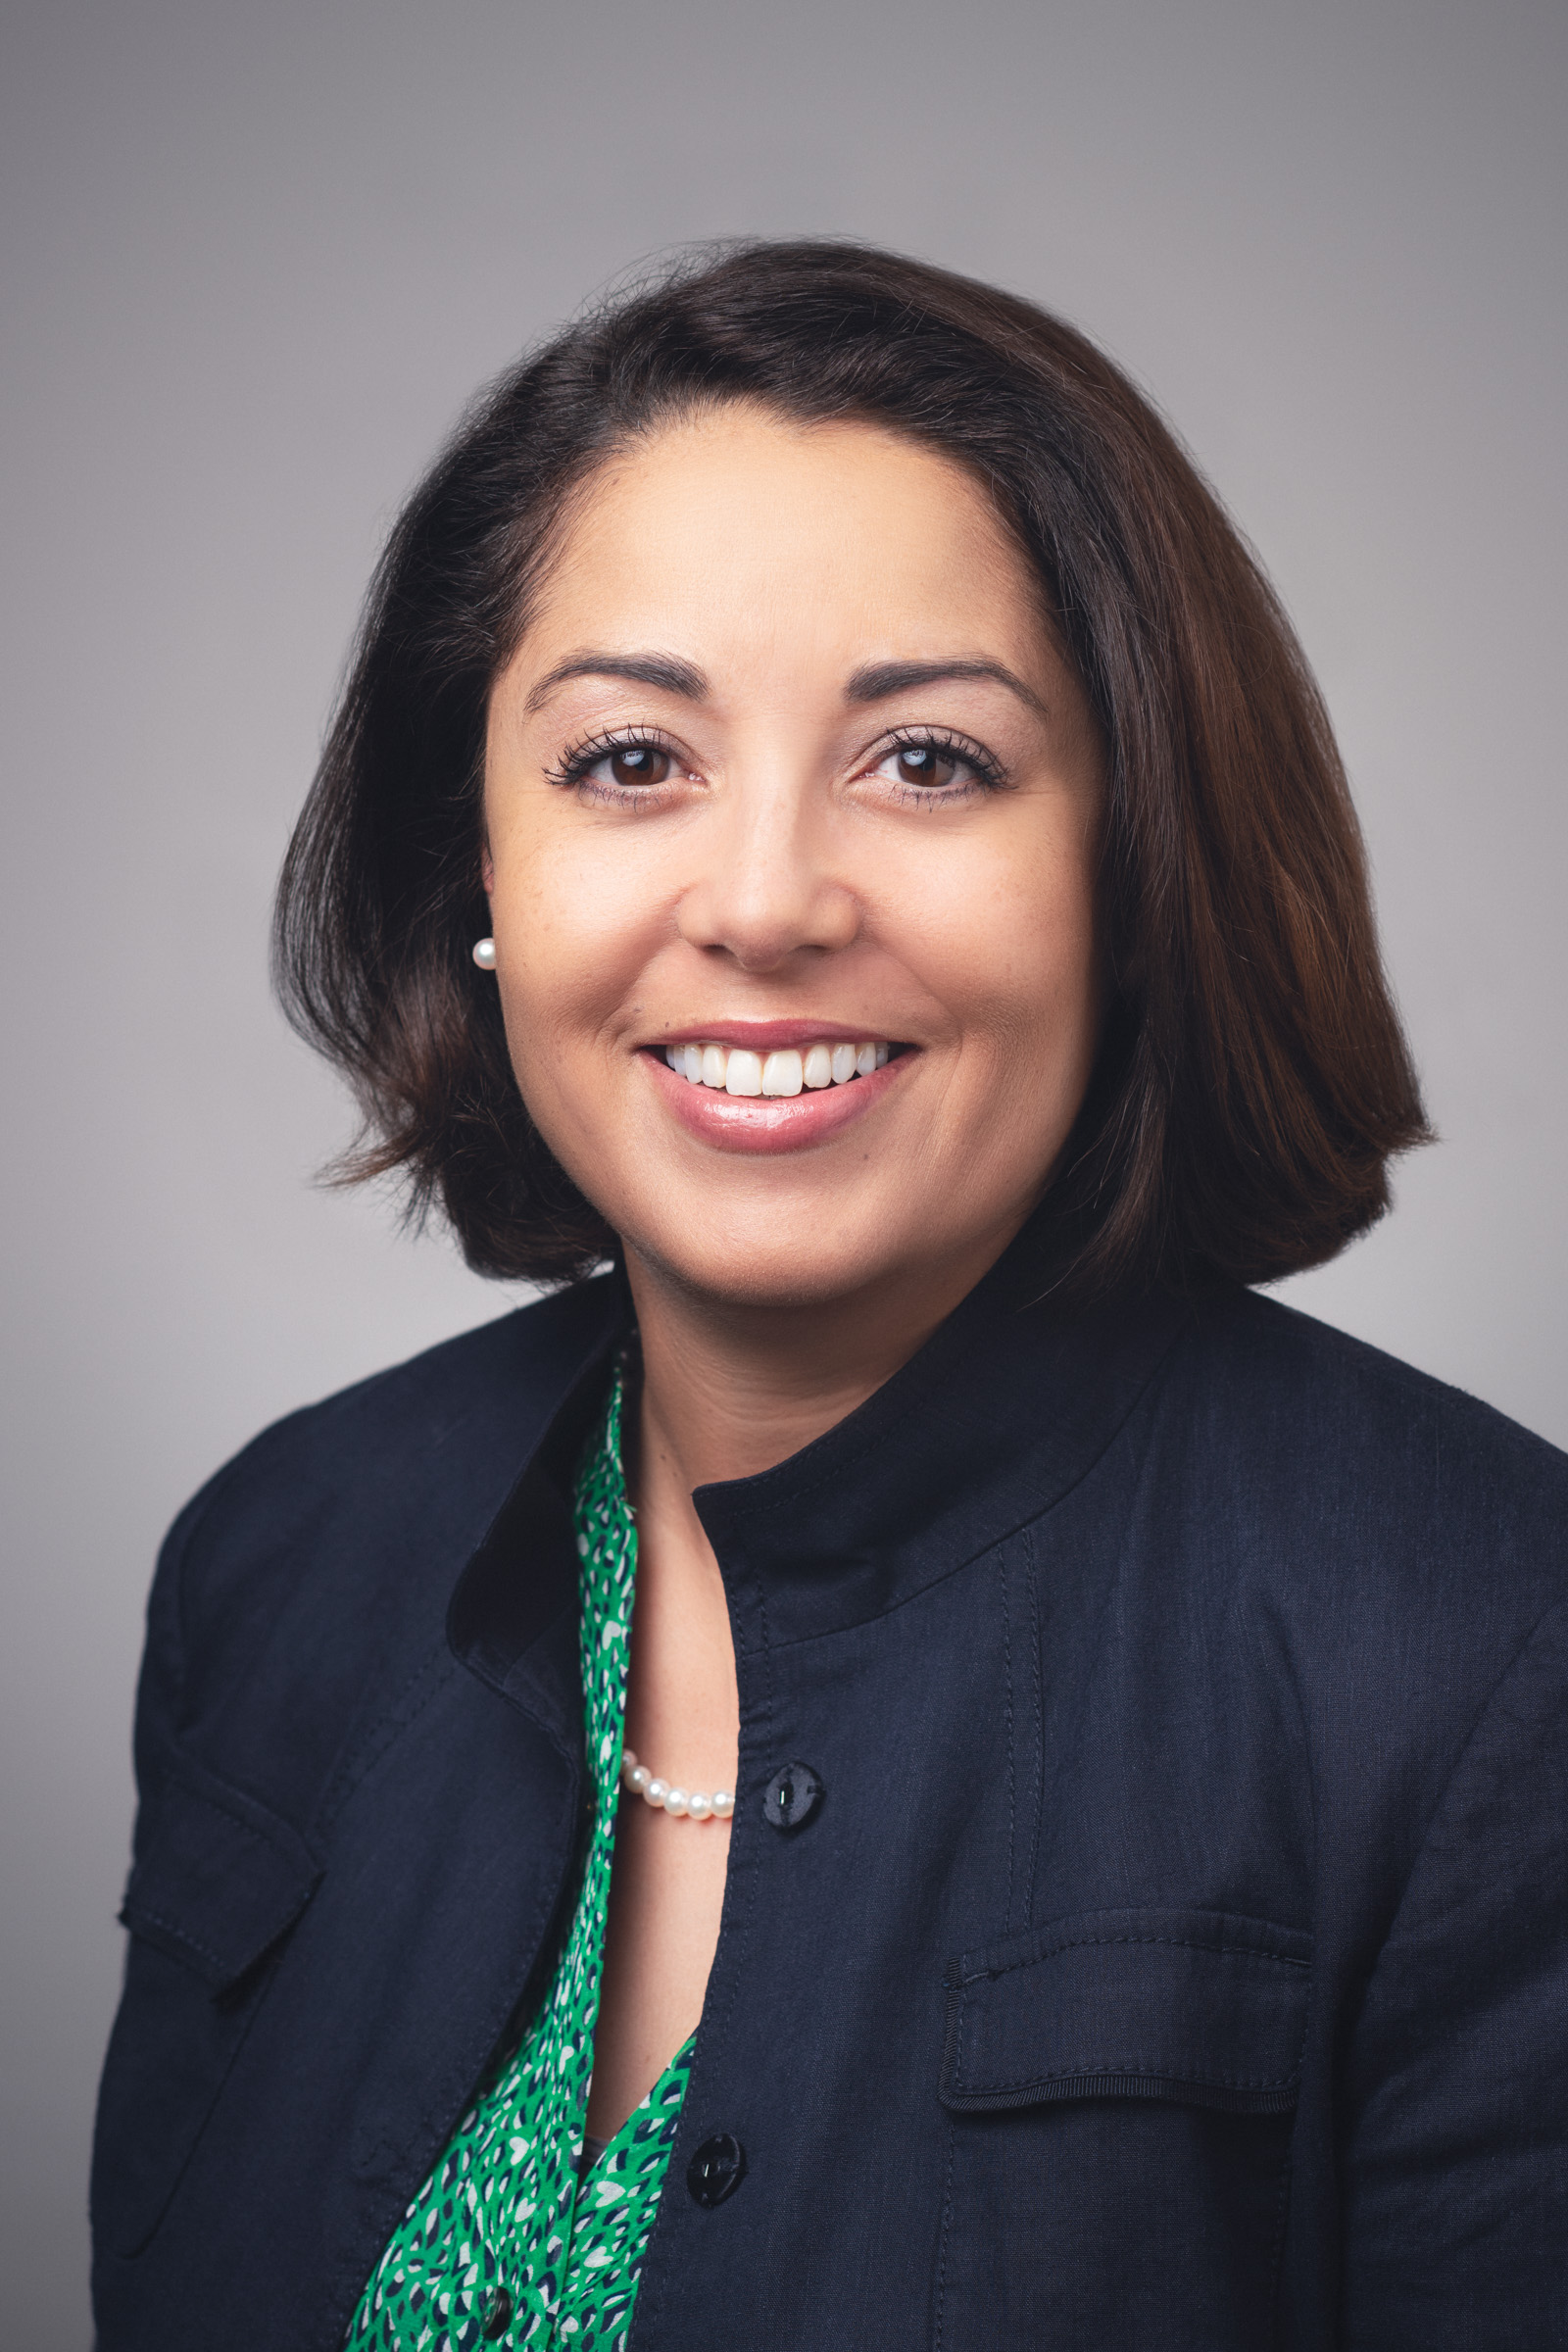 Vanessa Fox, CEO